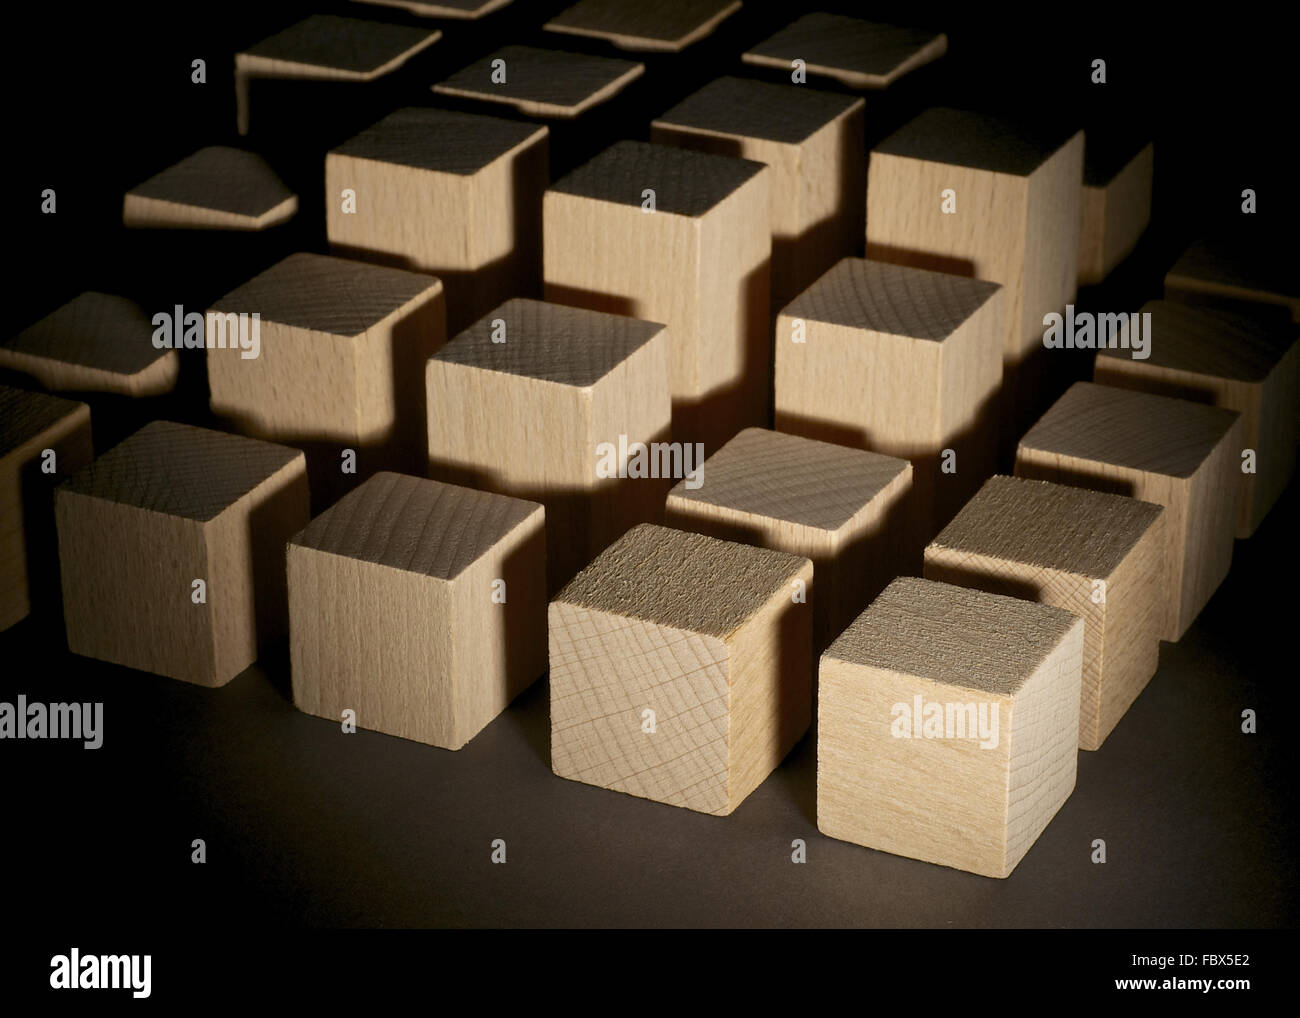 Building Bricks: Archetype of a Skyline Stock Photo